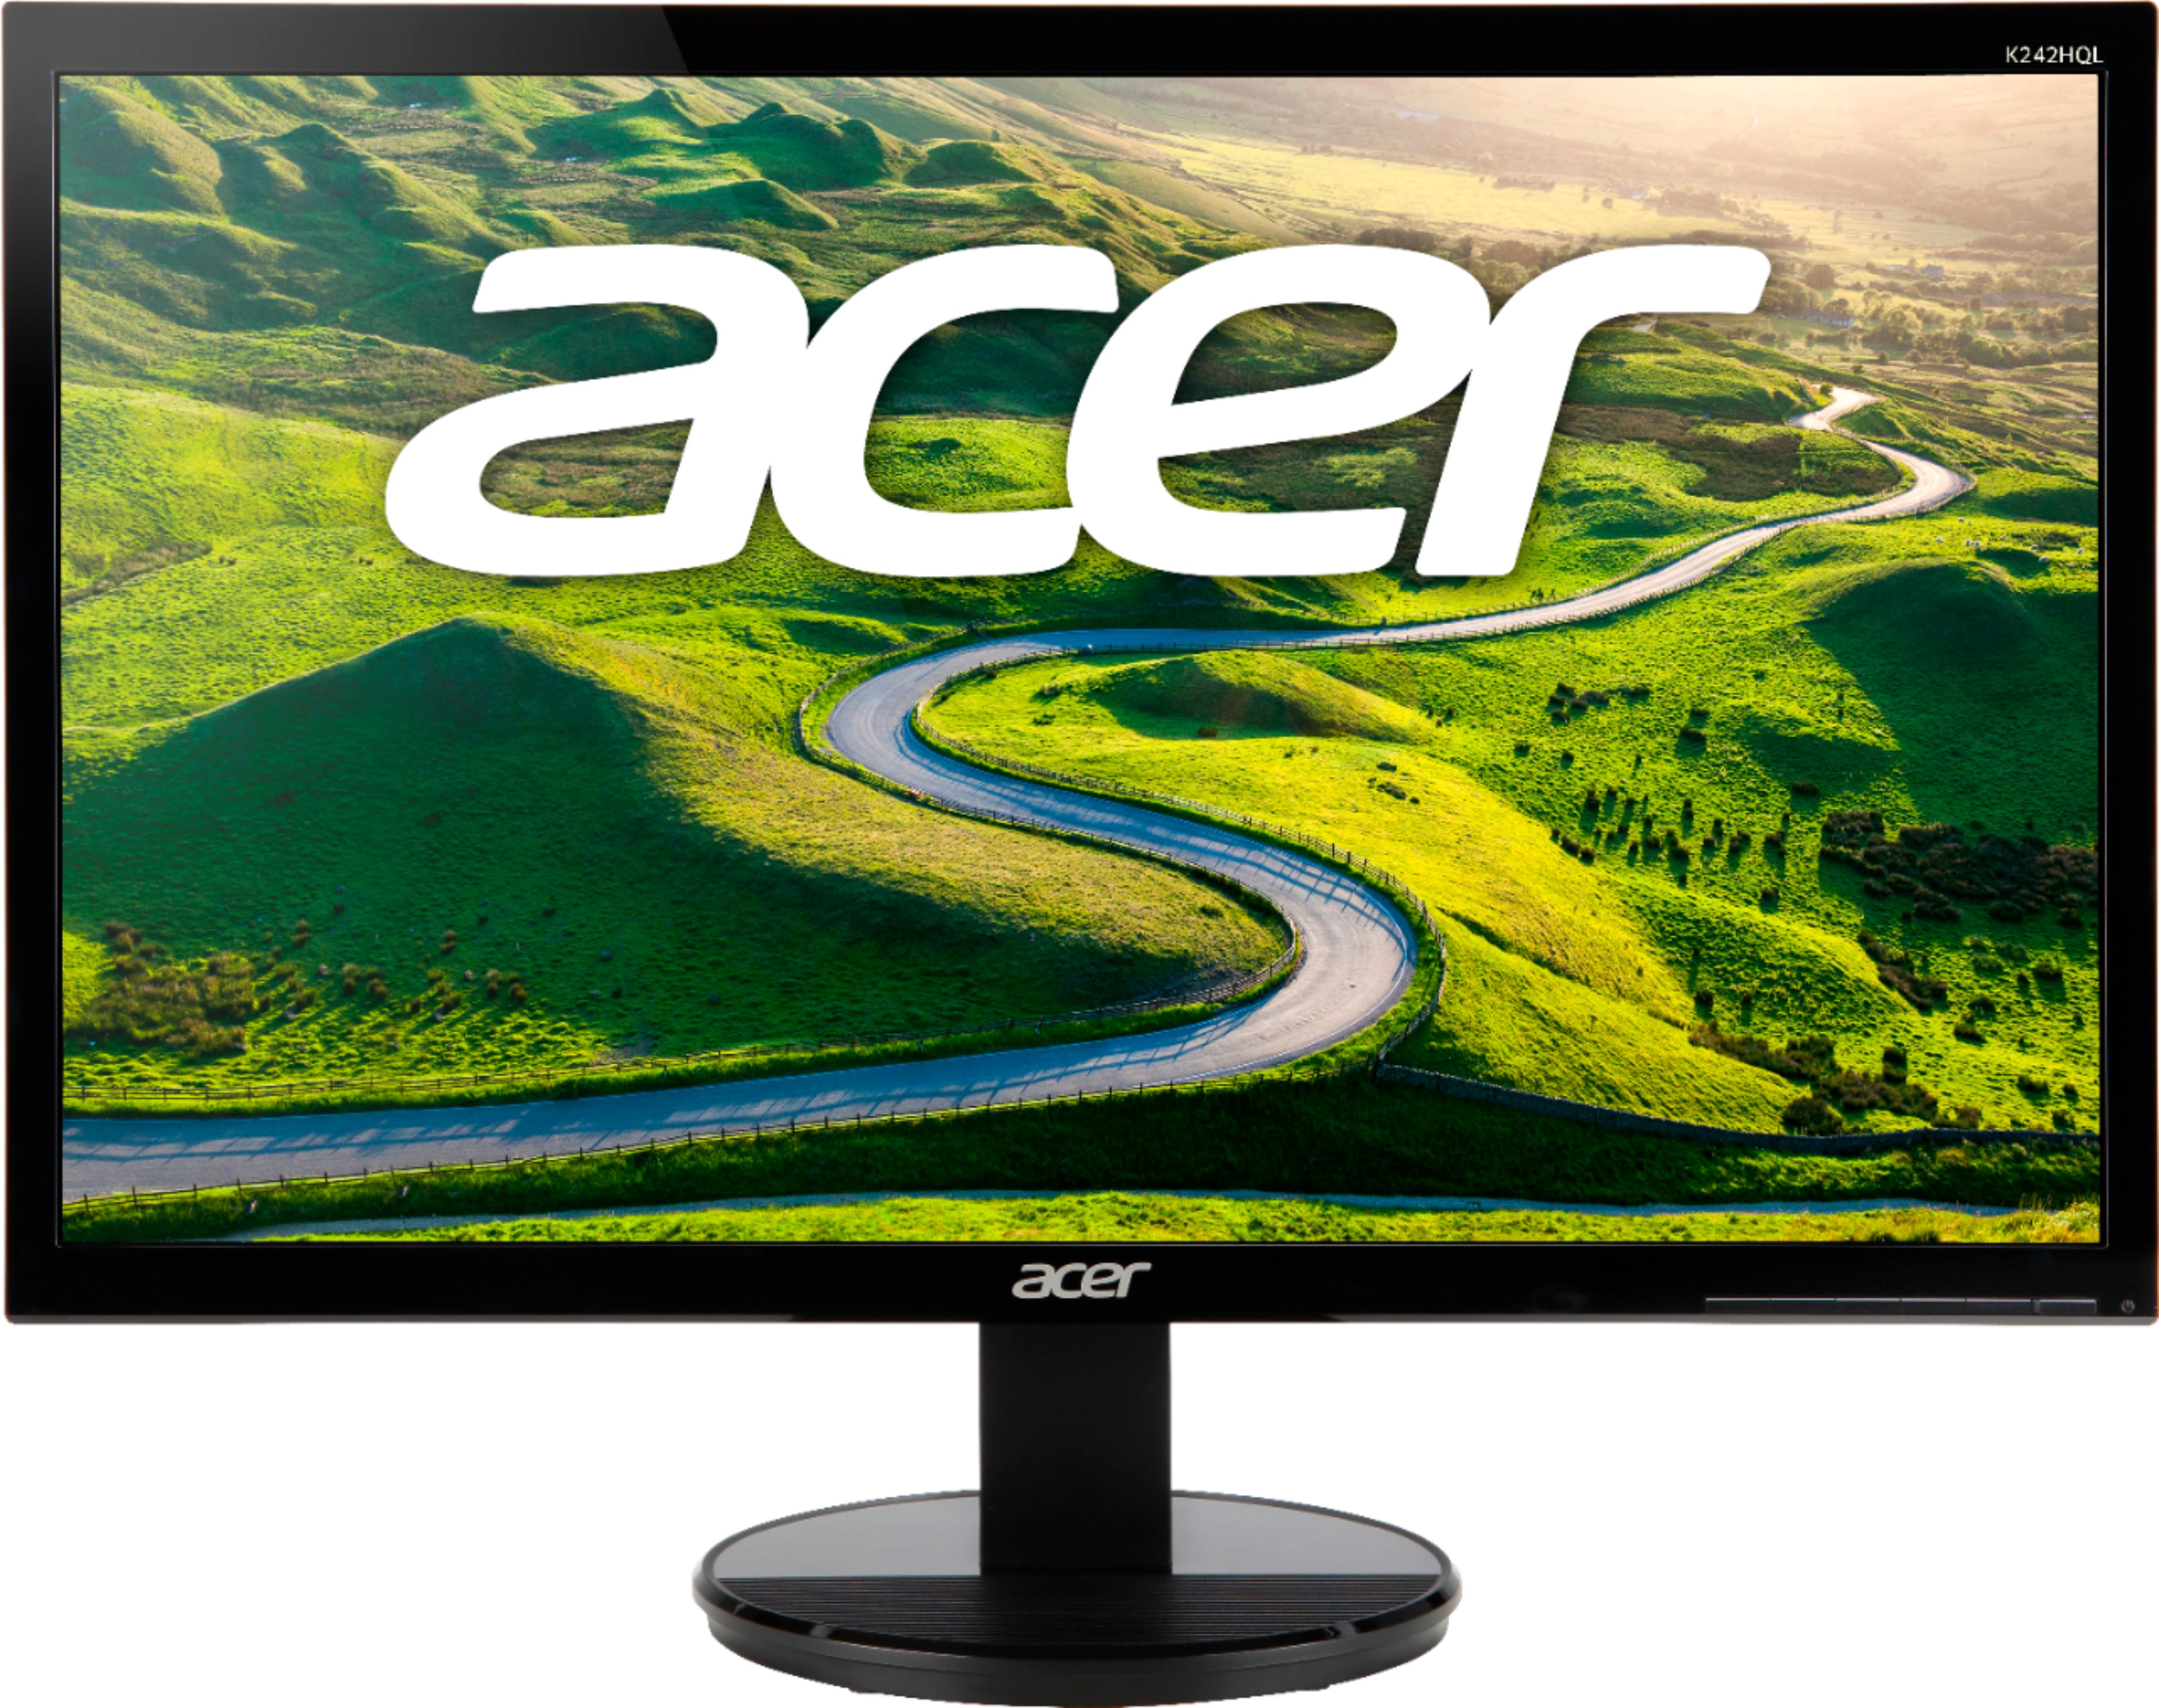 residentie plastic omzeilen Best Buy: Acer 23.6" LED FHD Monitor (DVI, HDMI, VGA) Black K242HQL